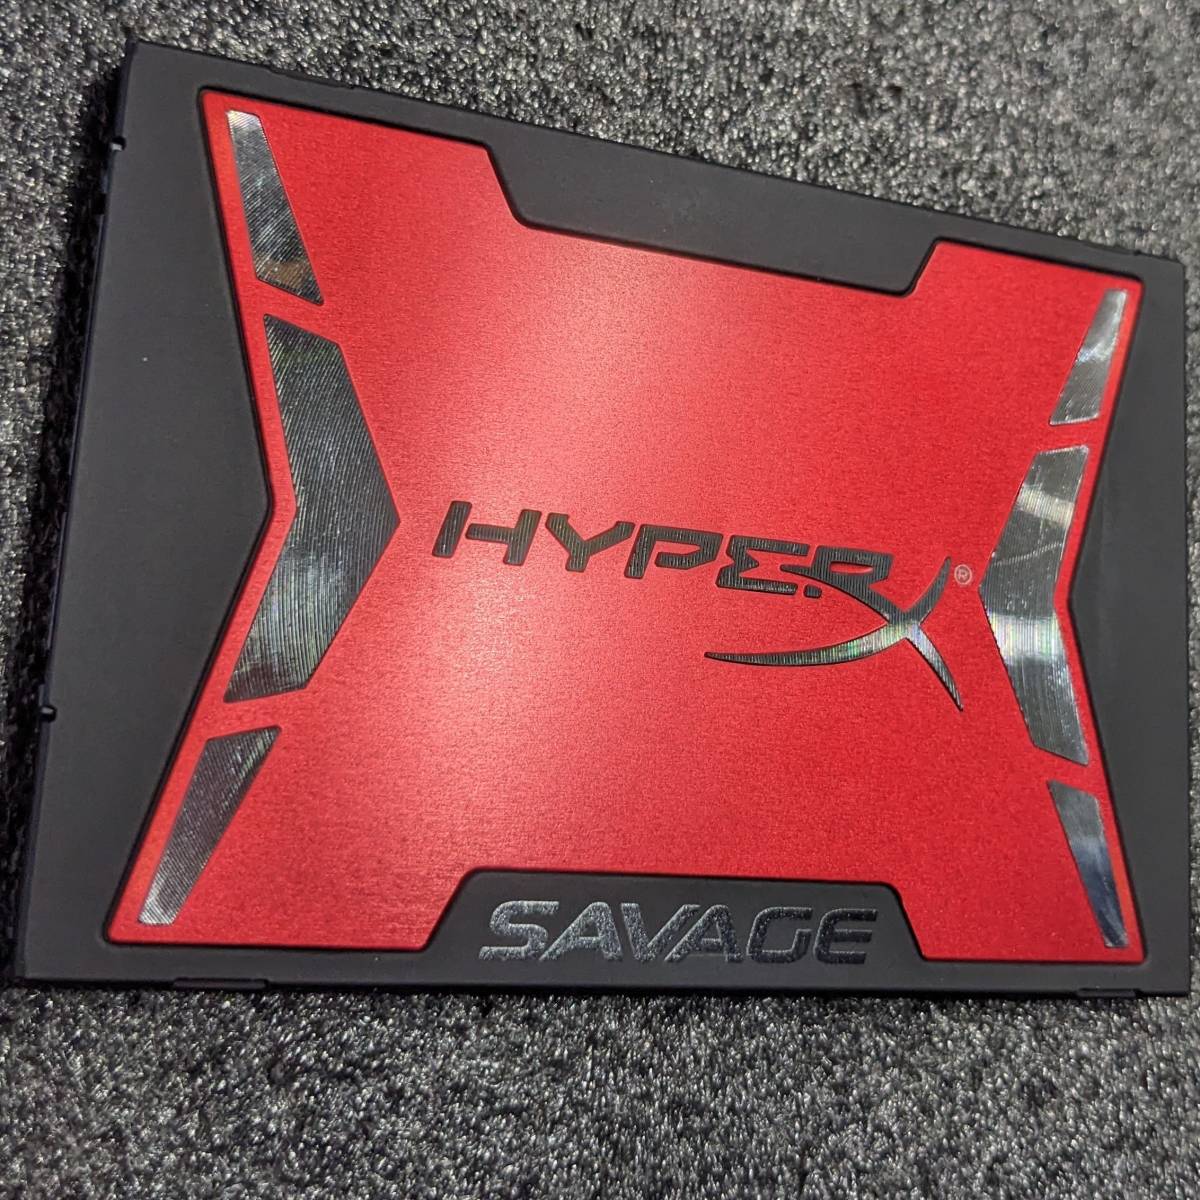 【中古】Kingston HyperX Savage 480GB SHSS37A/480G [2.5インチ SATA 7mm厚 MLC]_画像4